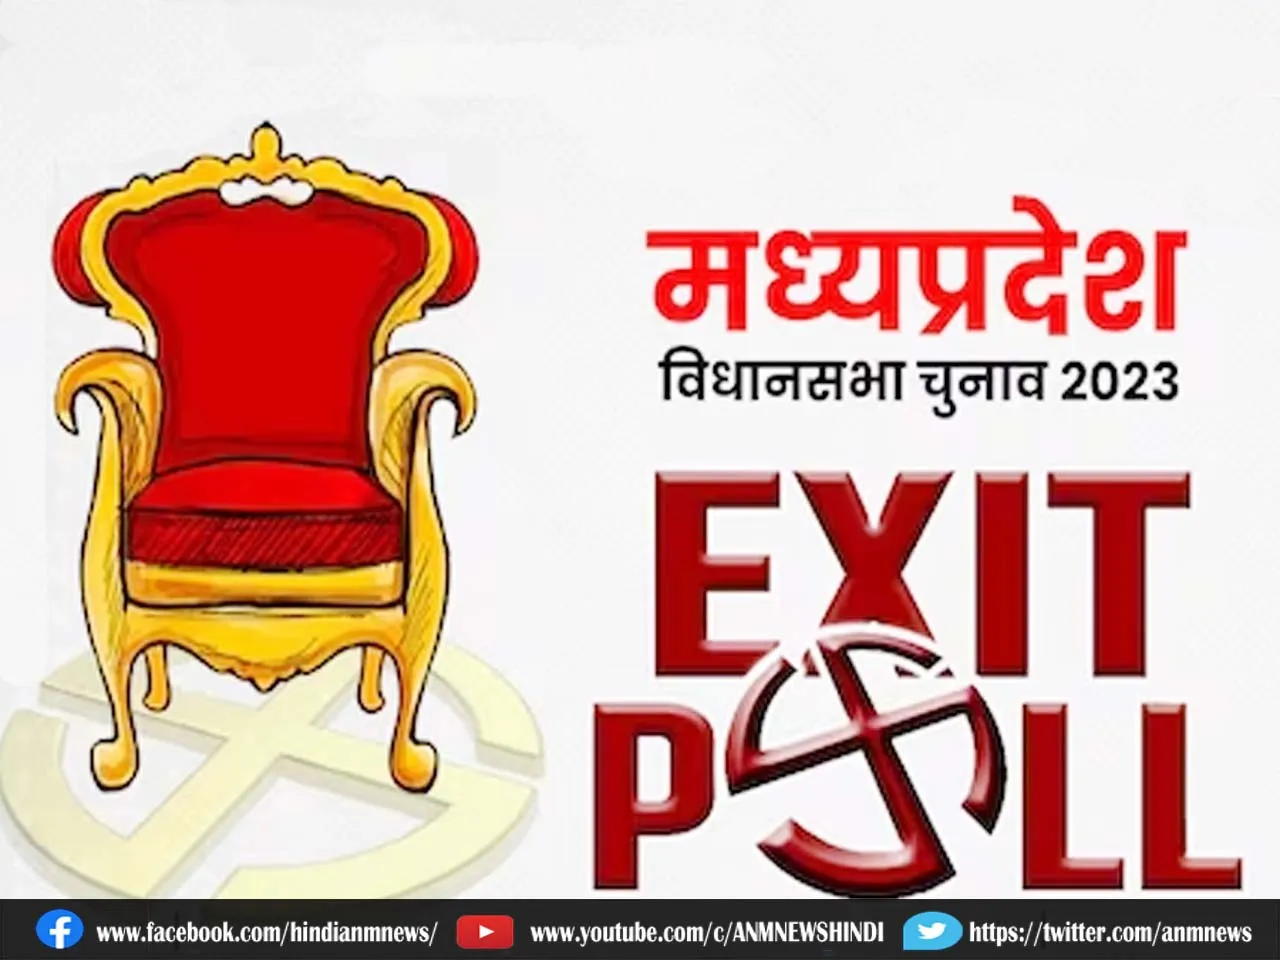 Madhya Pradesh Assembly Elections 2023 : इस बार कौन मारेगा बाजी, कमल या कमलनाथ?